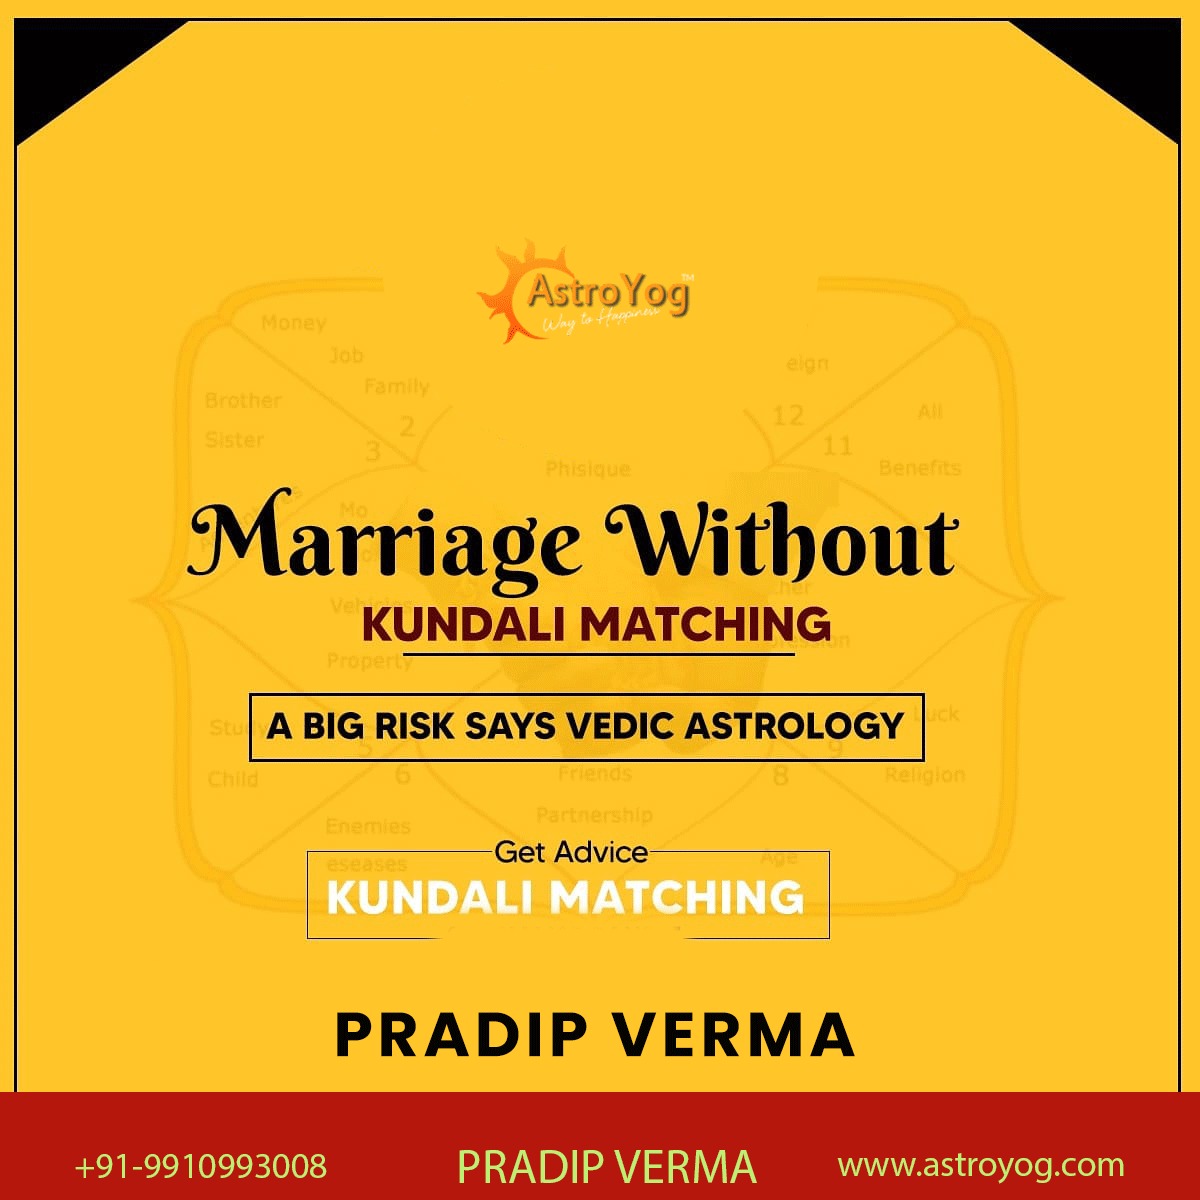 Marriage without Kundali Matching..
..
Call & whatsapp - +91-9910993008
Visit us - astroyog.com
#astrology #astrologers #career #mumbai
#india #lovemarriage #job #pradipverma
#businessproblem #astrologerdelhi
#astrologer #bestastrologerindelhi #vastu